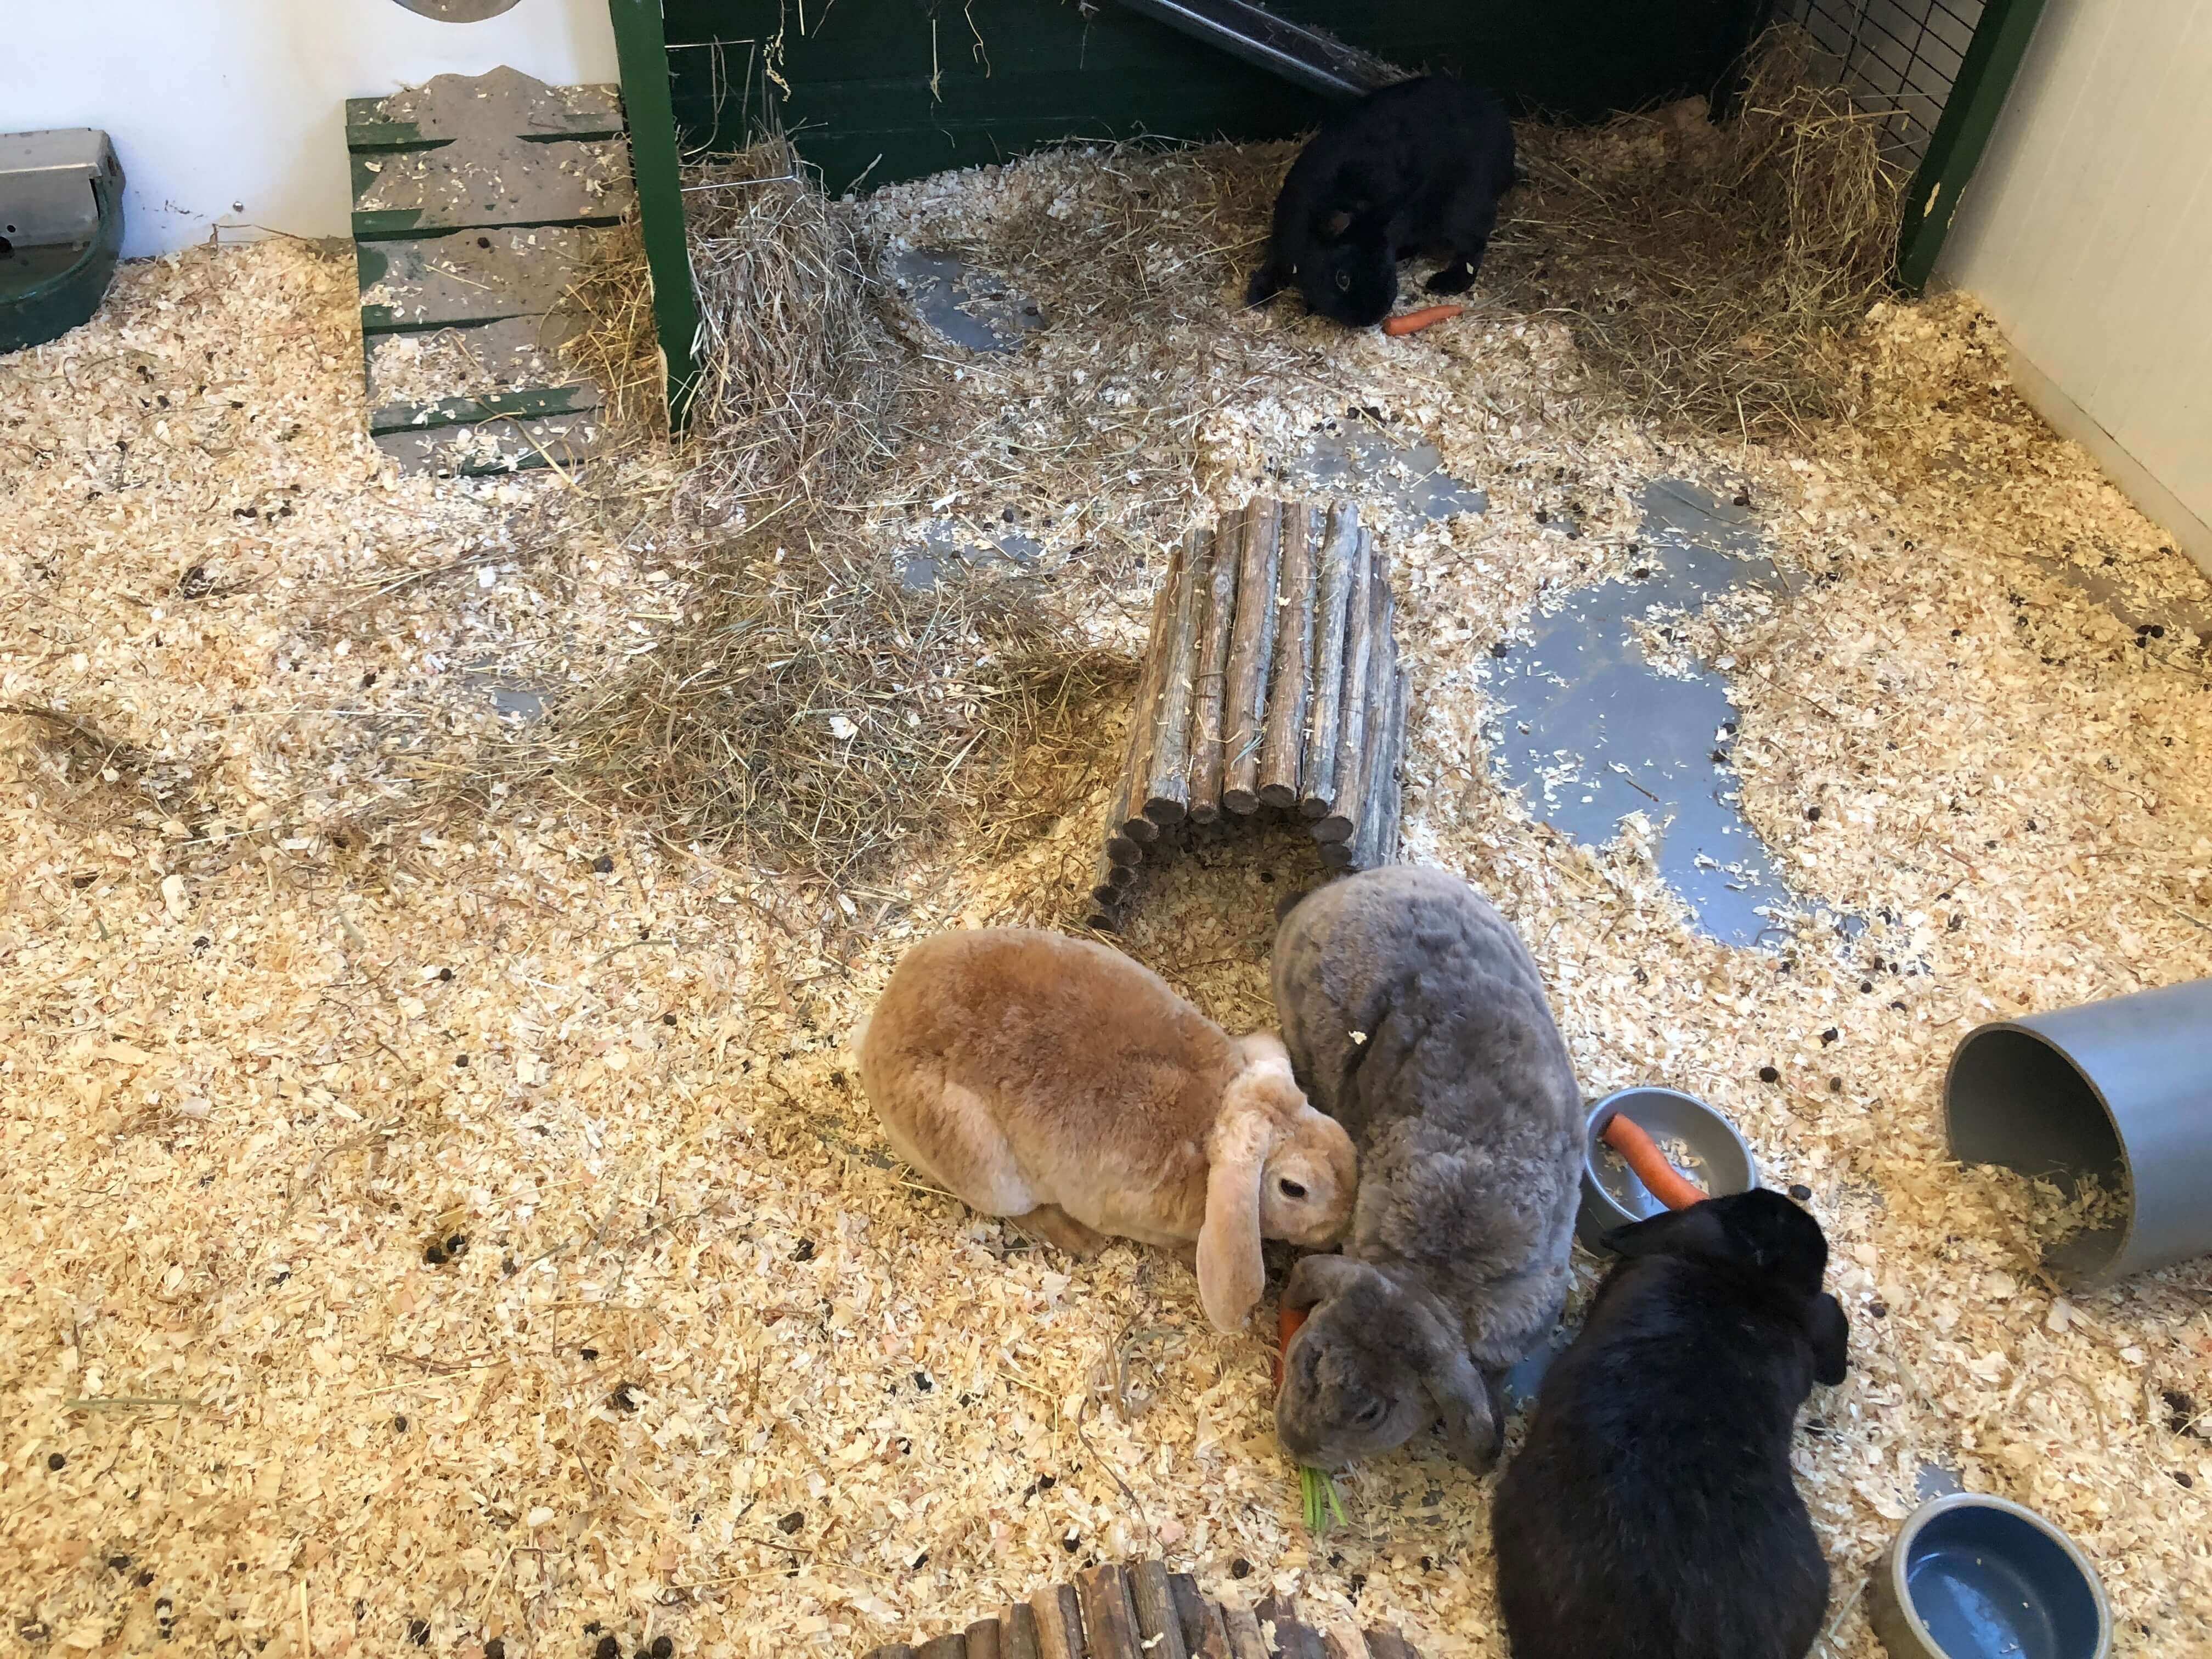 bunnies, pettting zoos in Amsterdam with kids